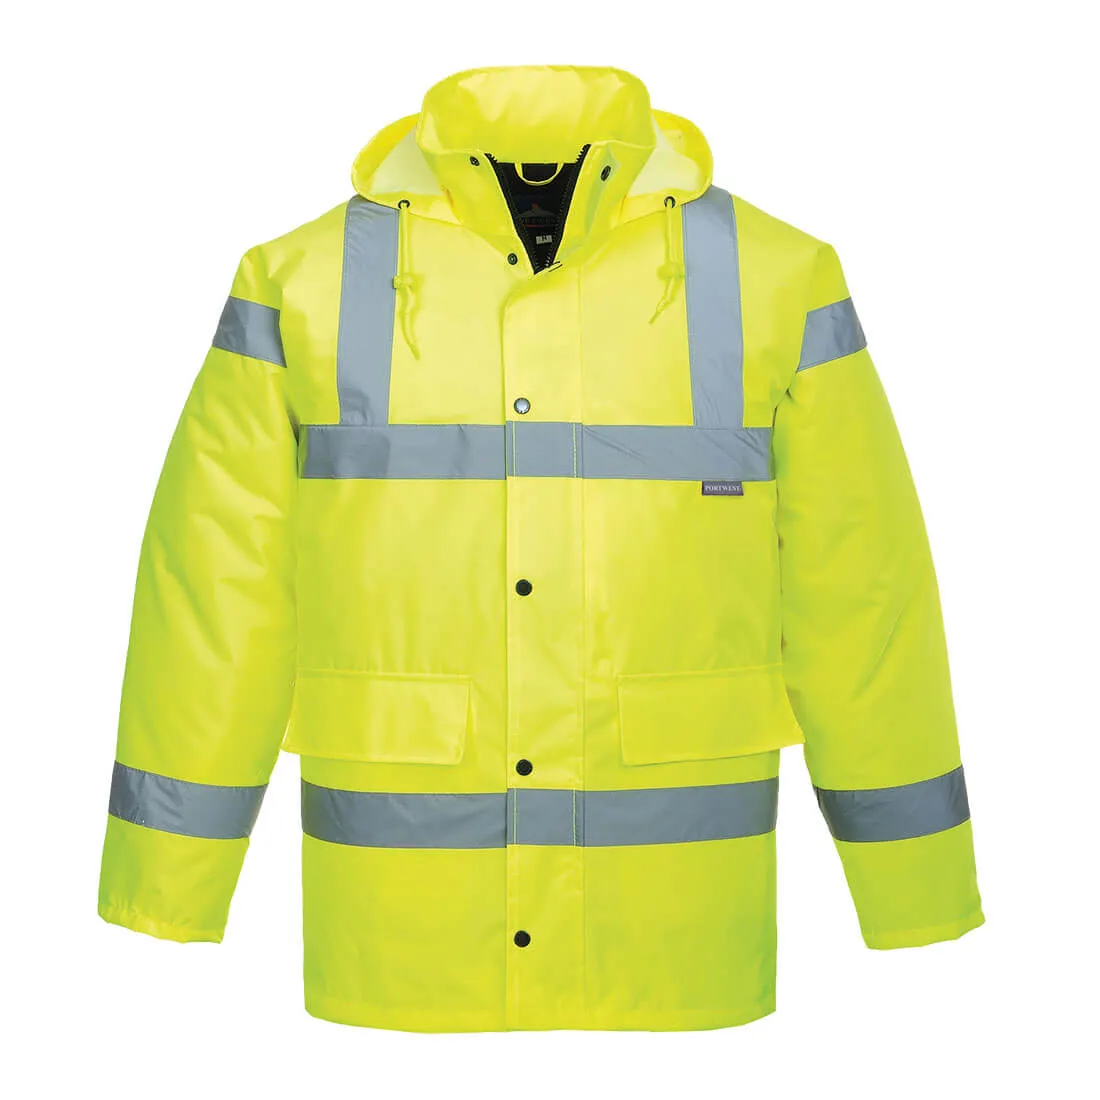 Oxford Weave 300D Class 3 Hi Vis Breathable Jacket - Yellow, 3XL